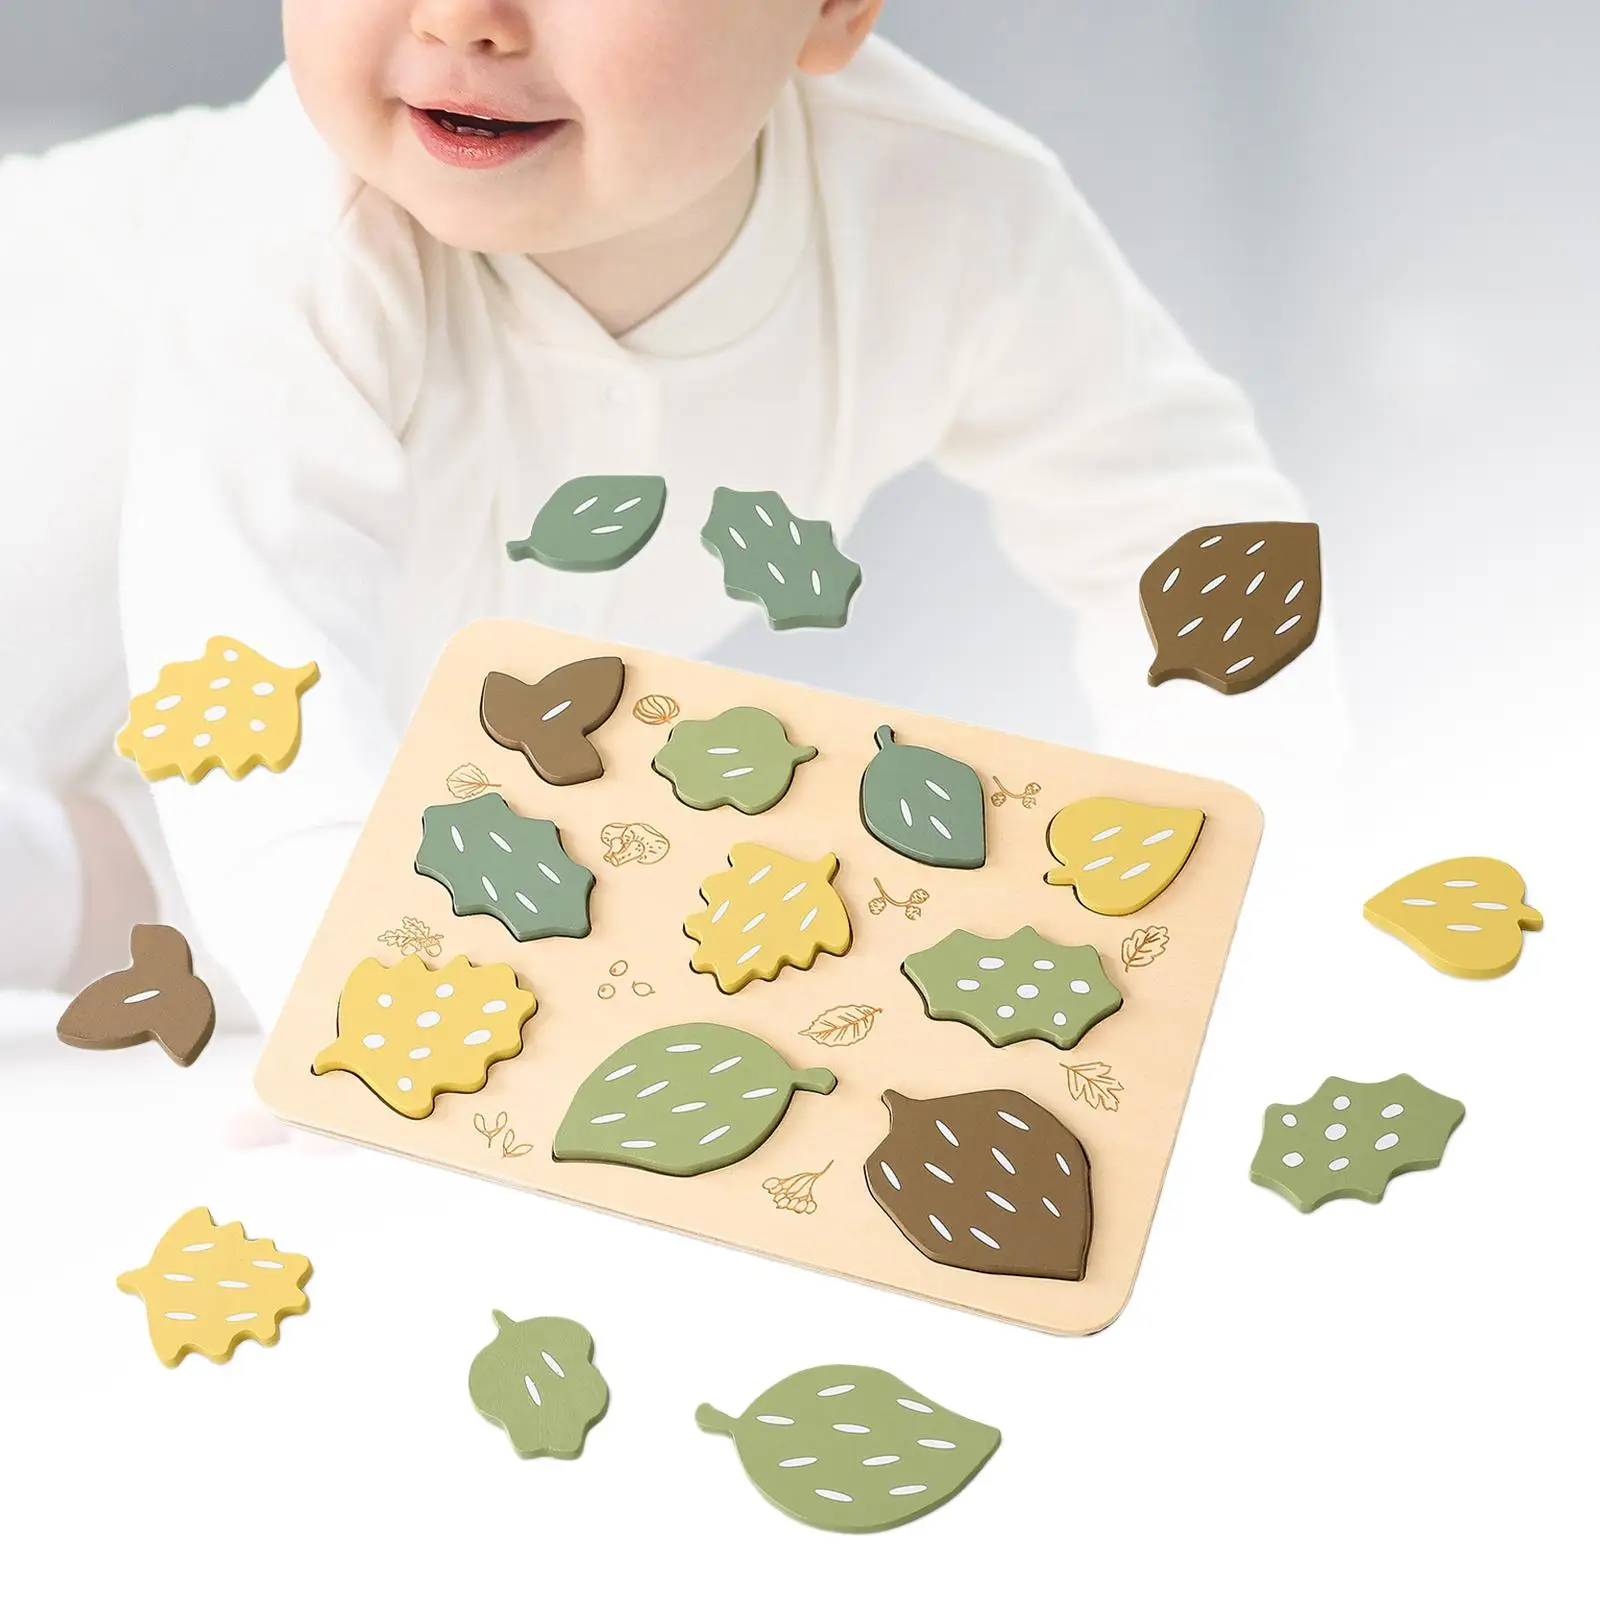 Leaf Jigsaw Puzzles Hand Eye Coordination Montessori Educational for Boys